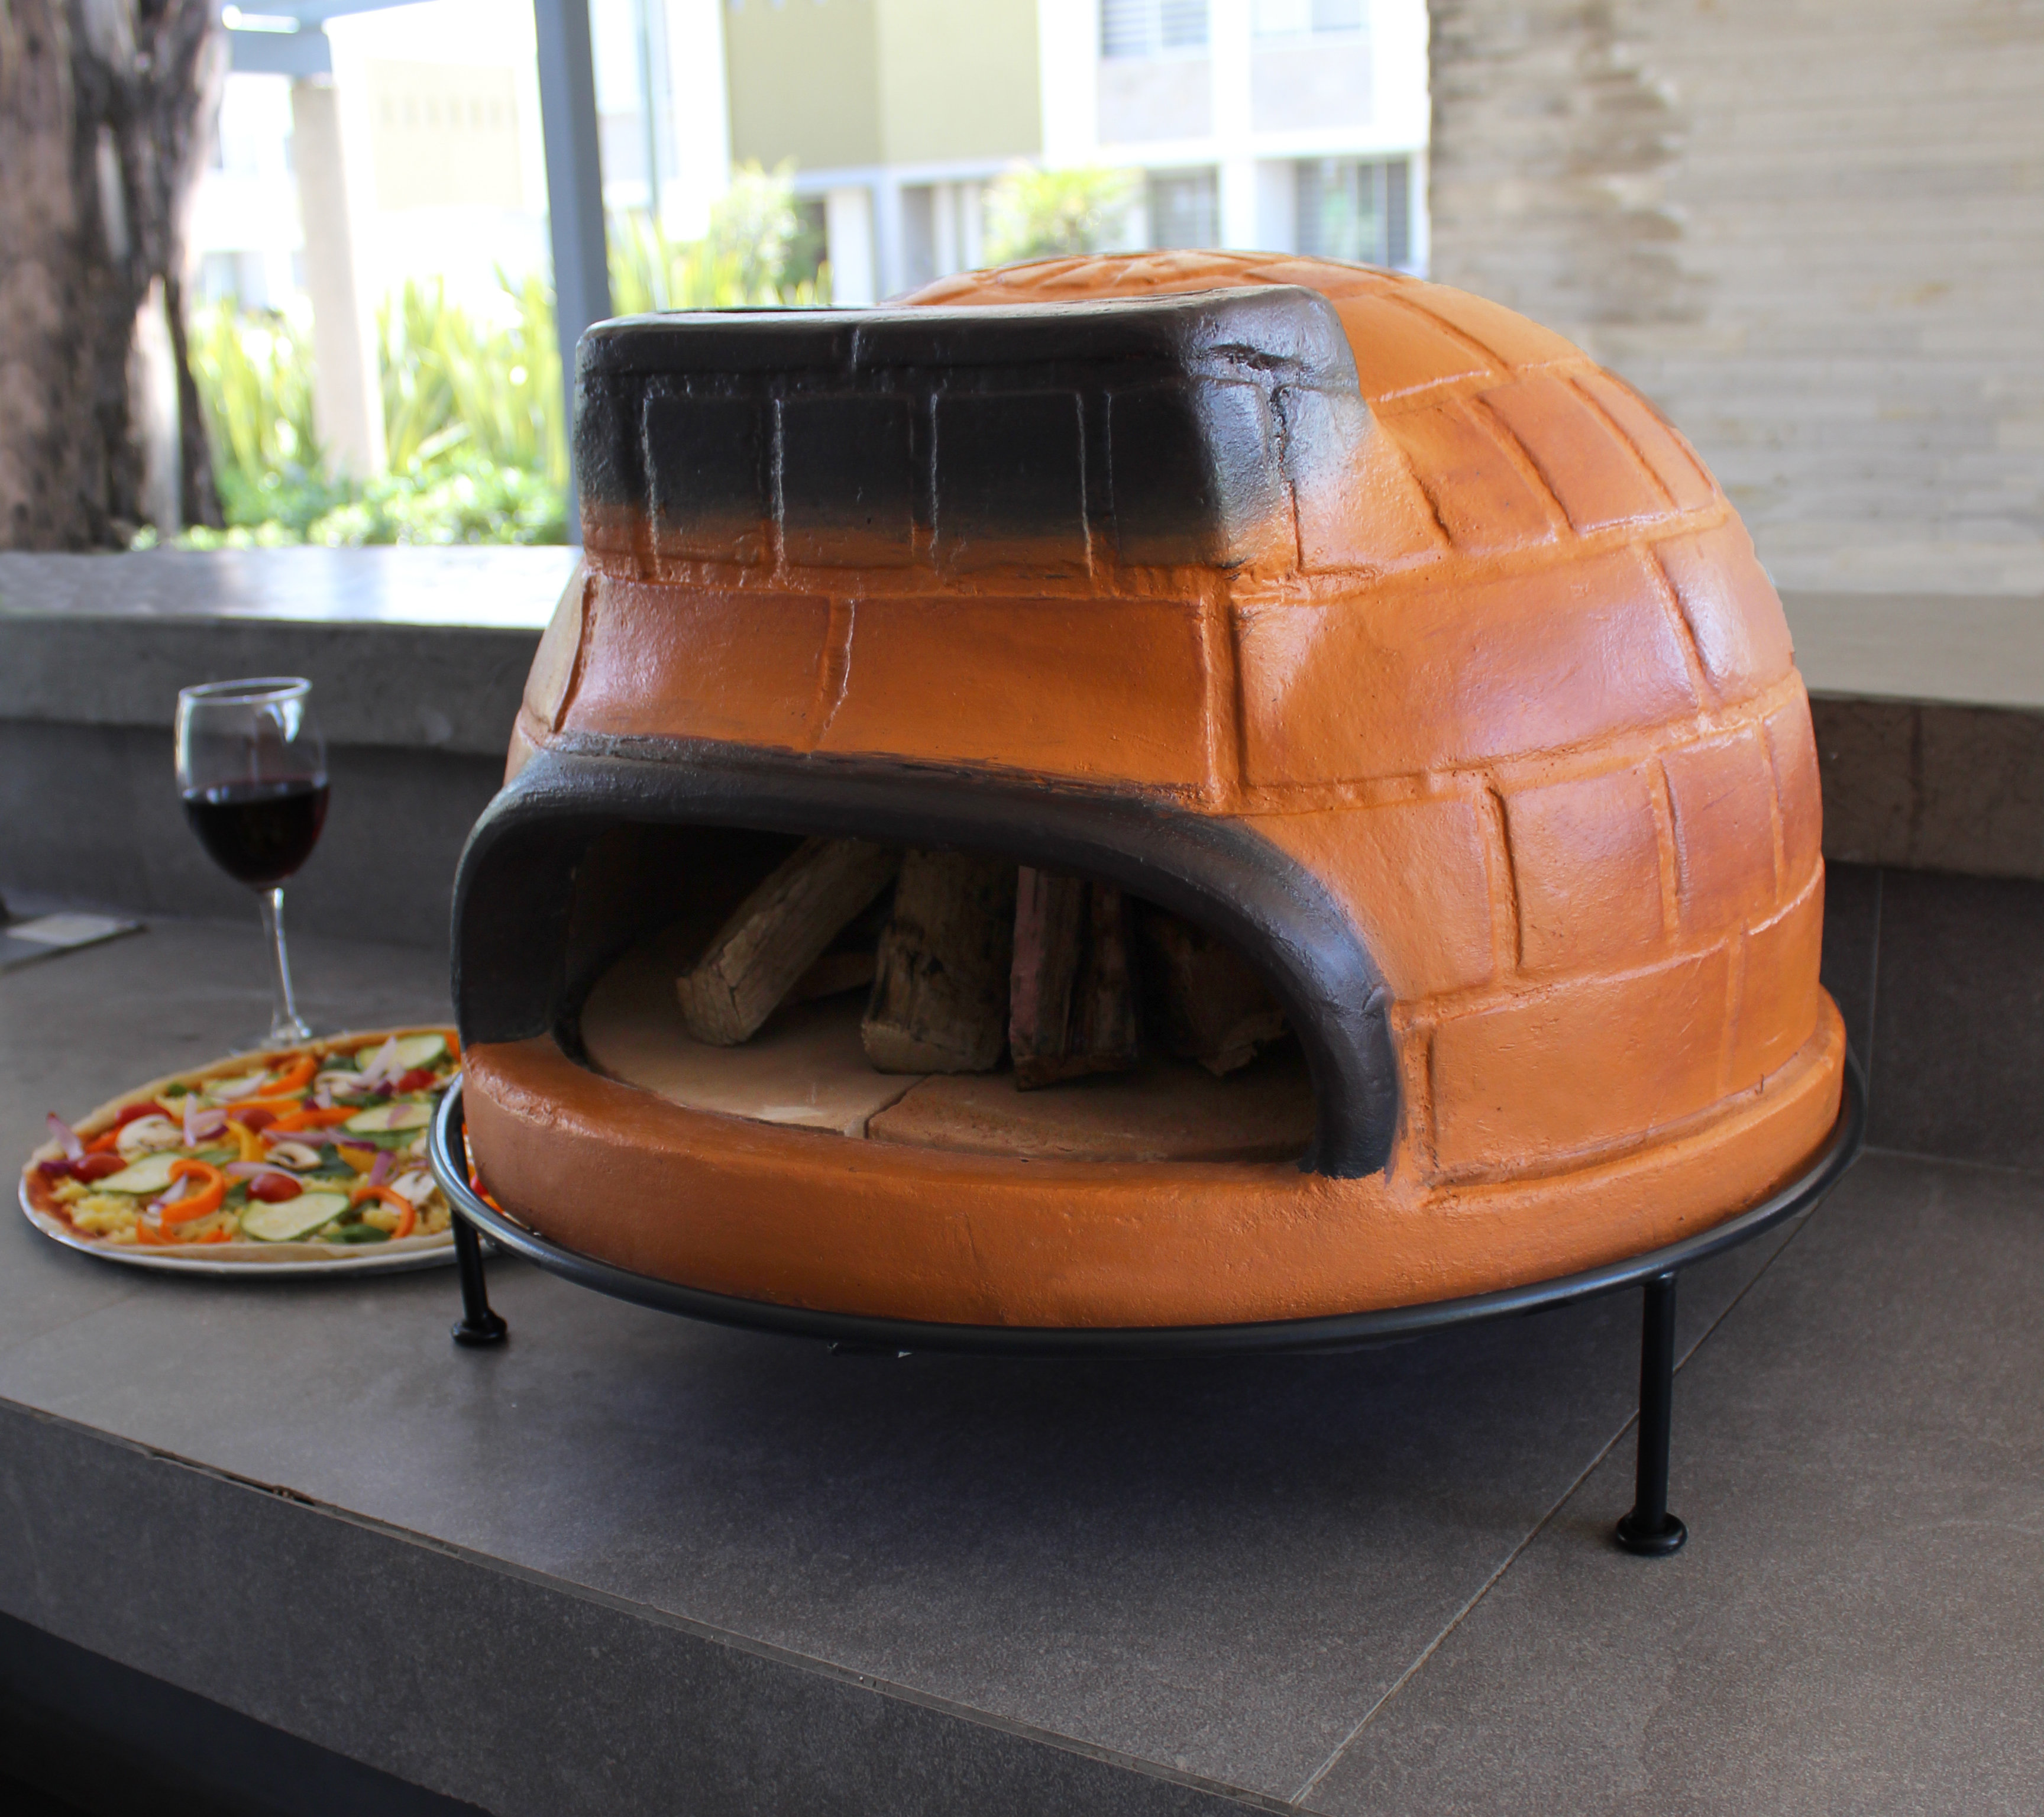 Talavera Clay Freestanding Wood Burning Pizza Oven in Orange